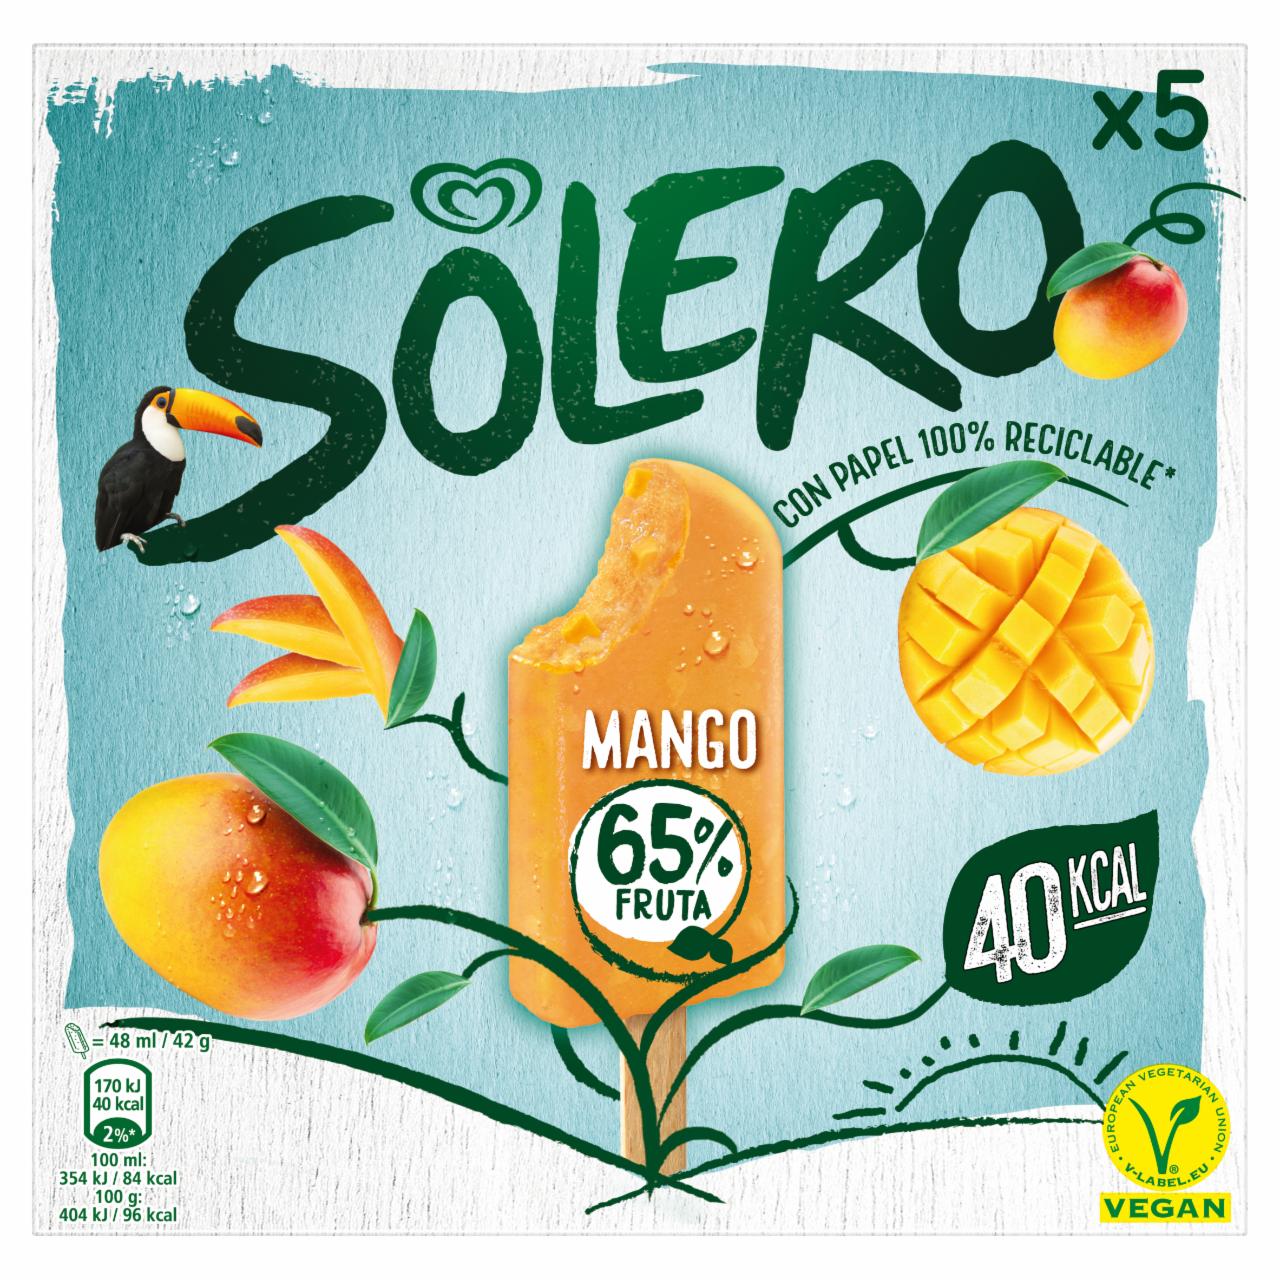 Képek - Solero multipack jégkrém mangó 5 x 48 ml